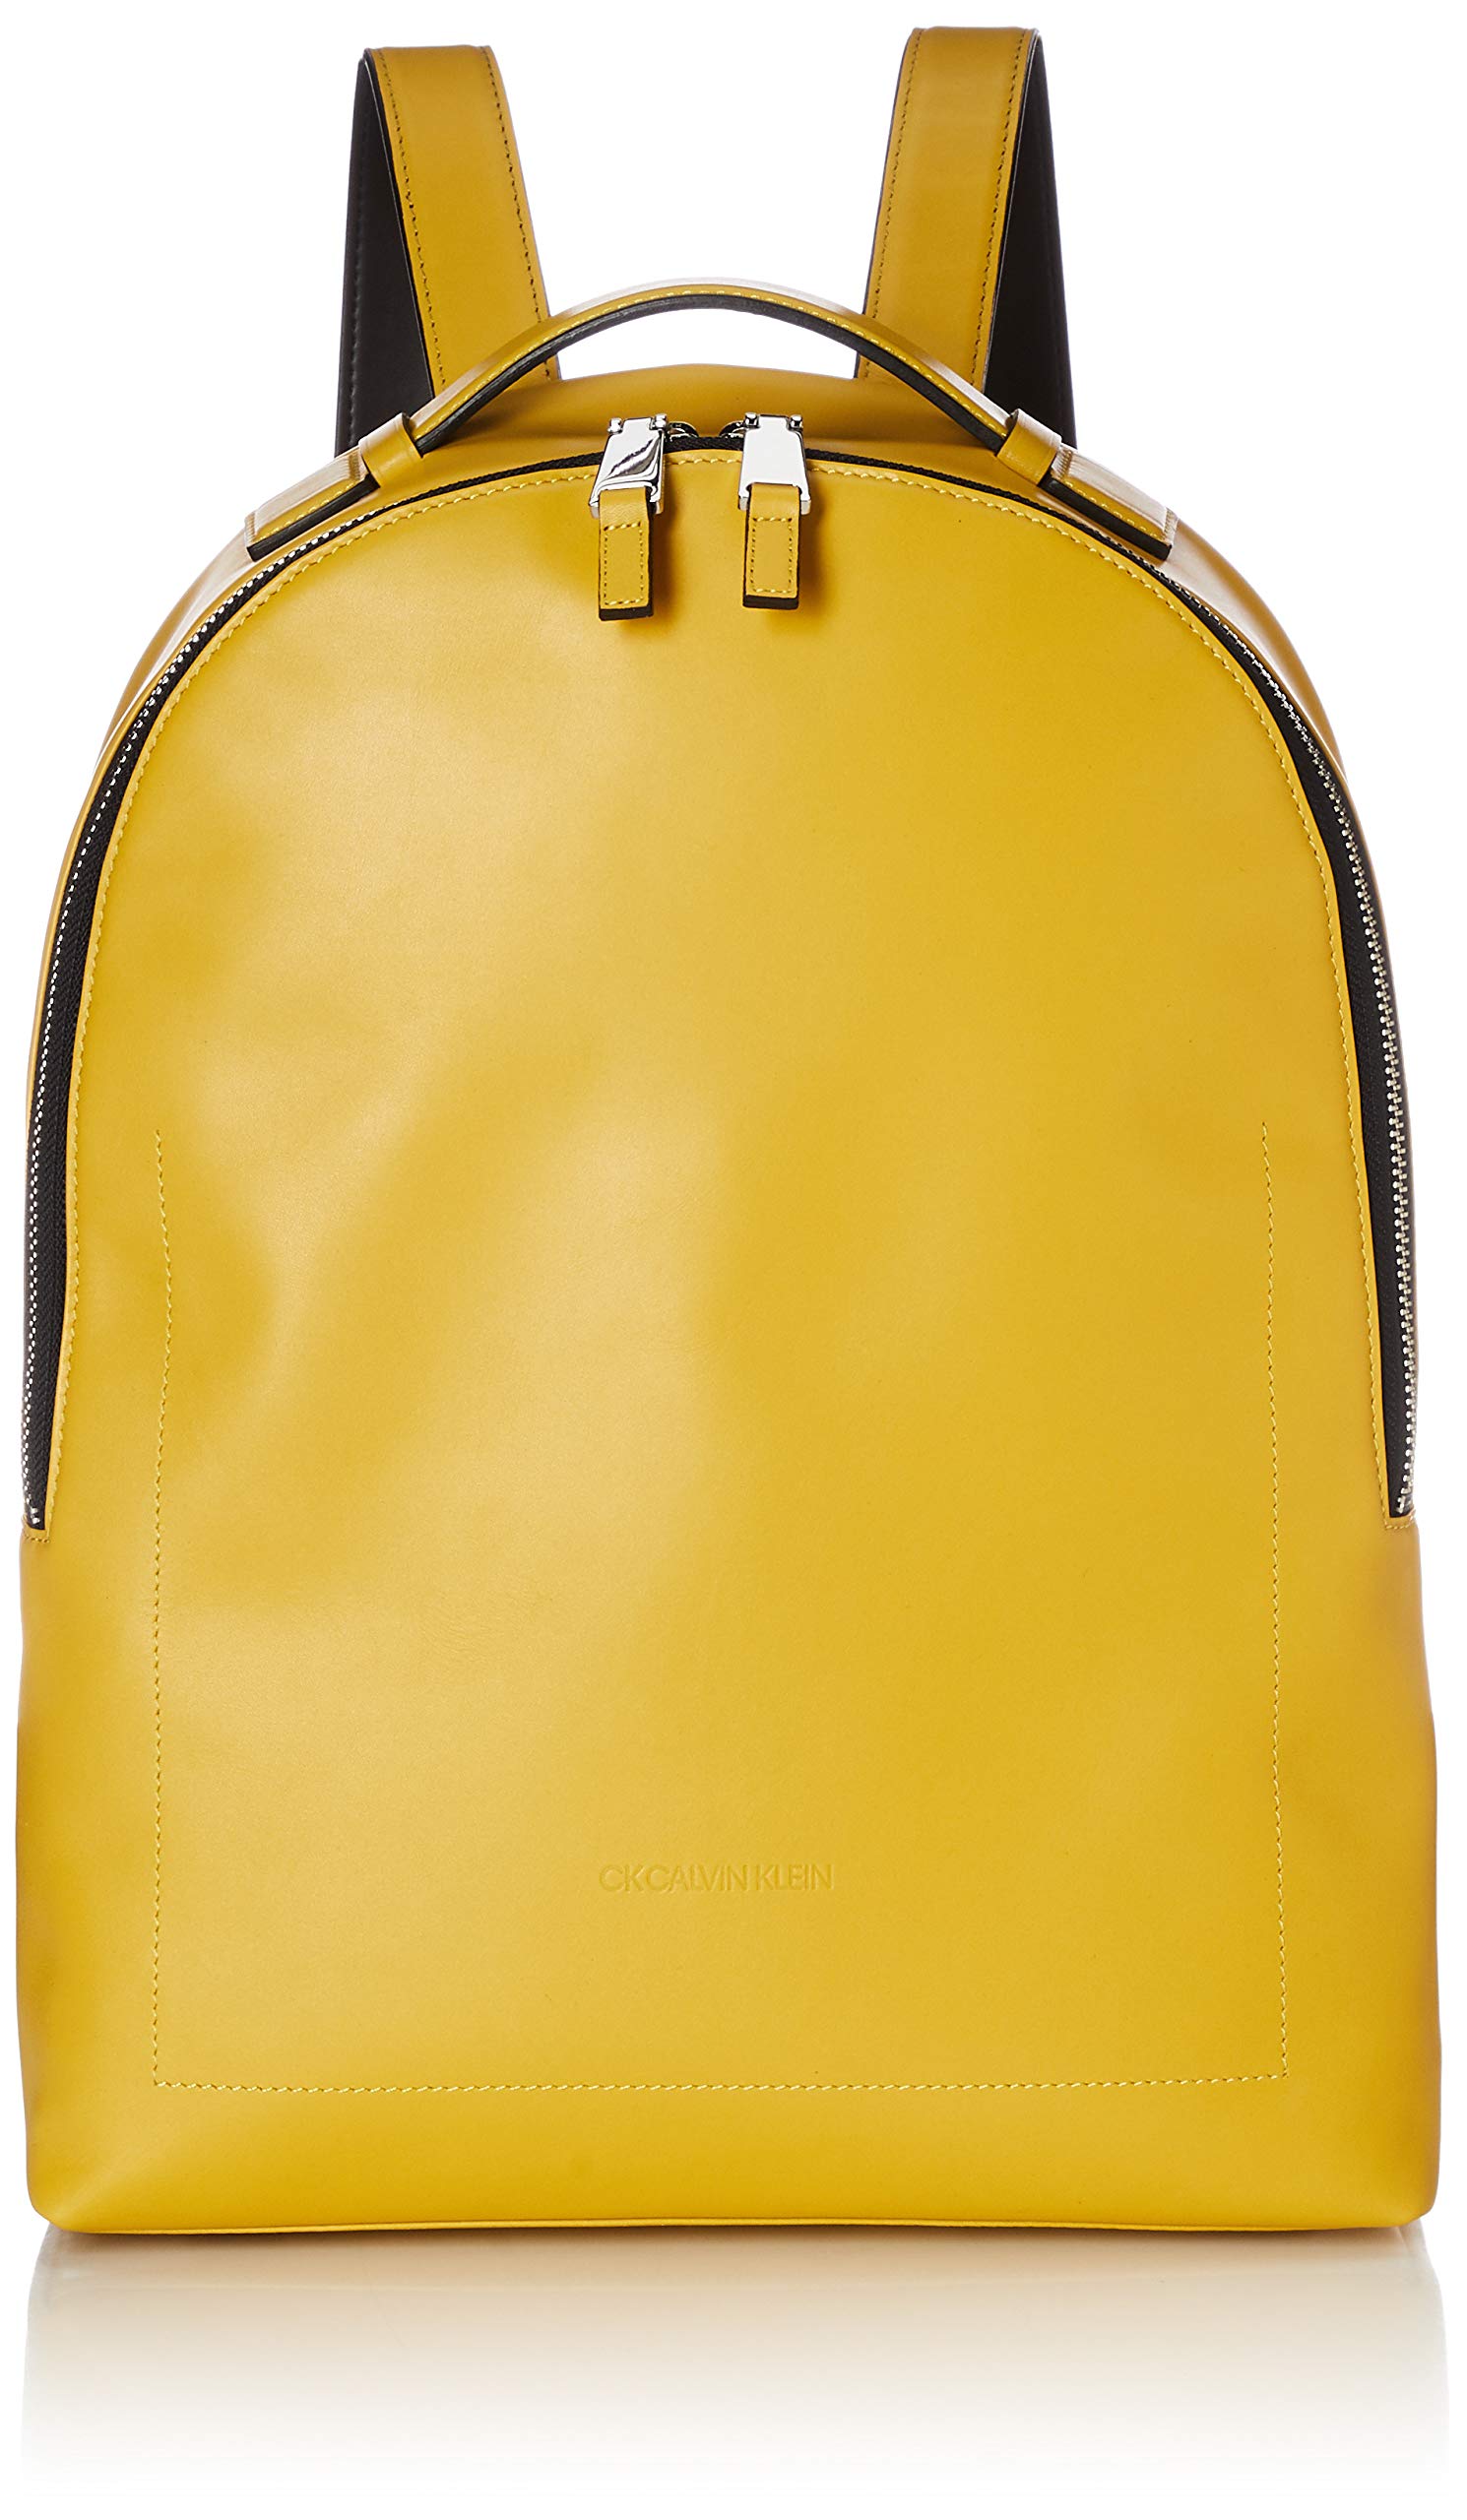 Calvin Klein 870702 Pravda Leather Backpack, Yellow